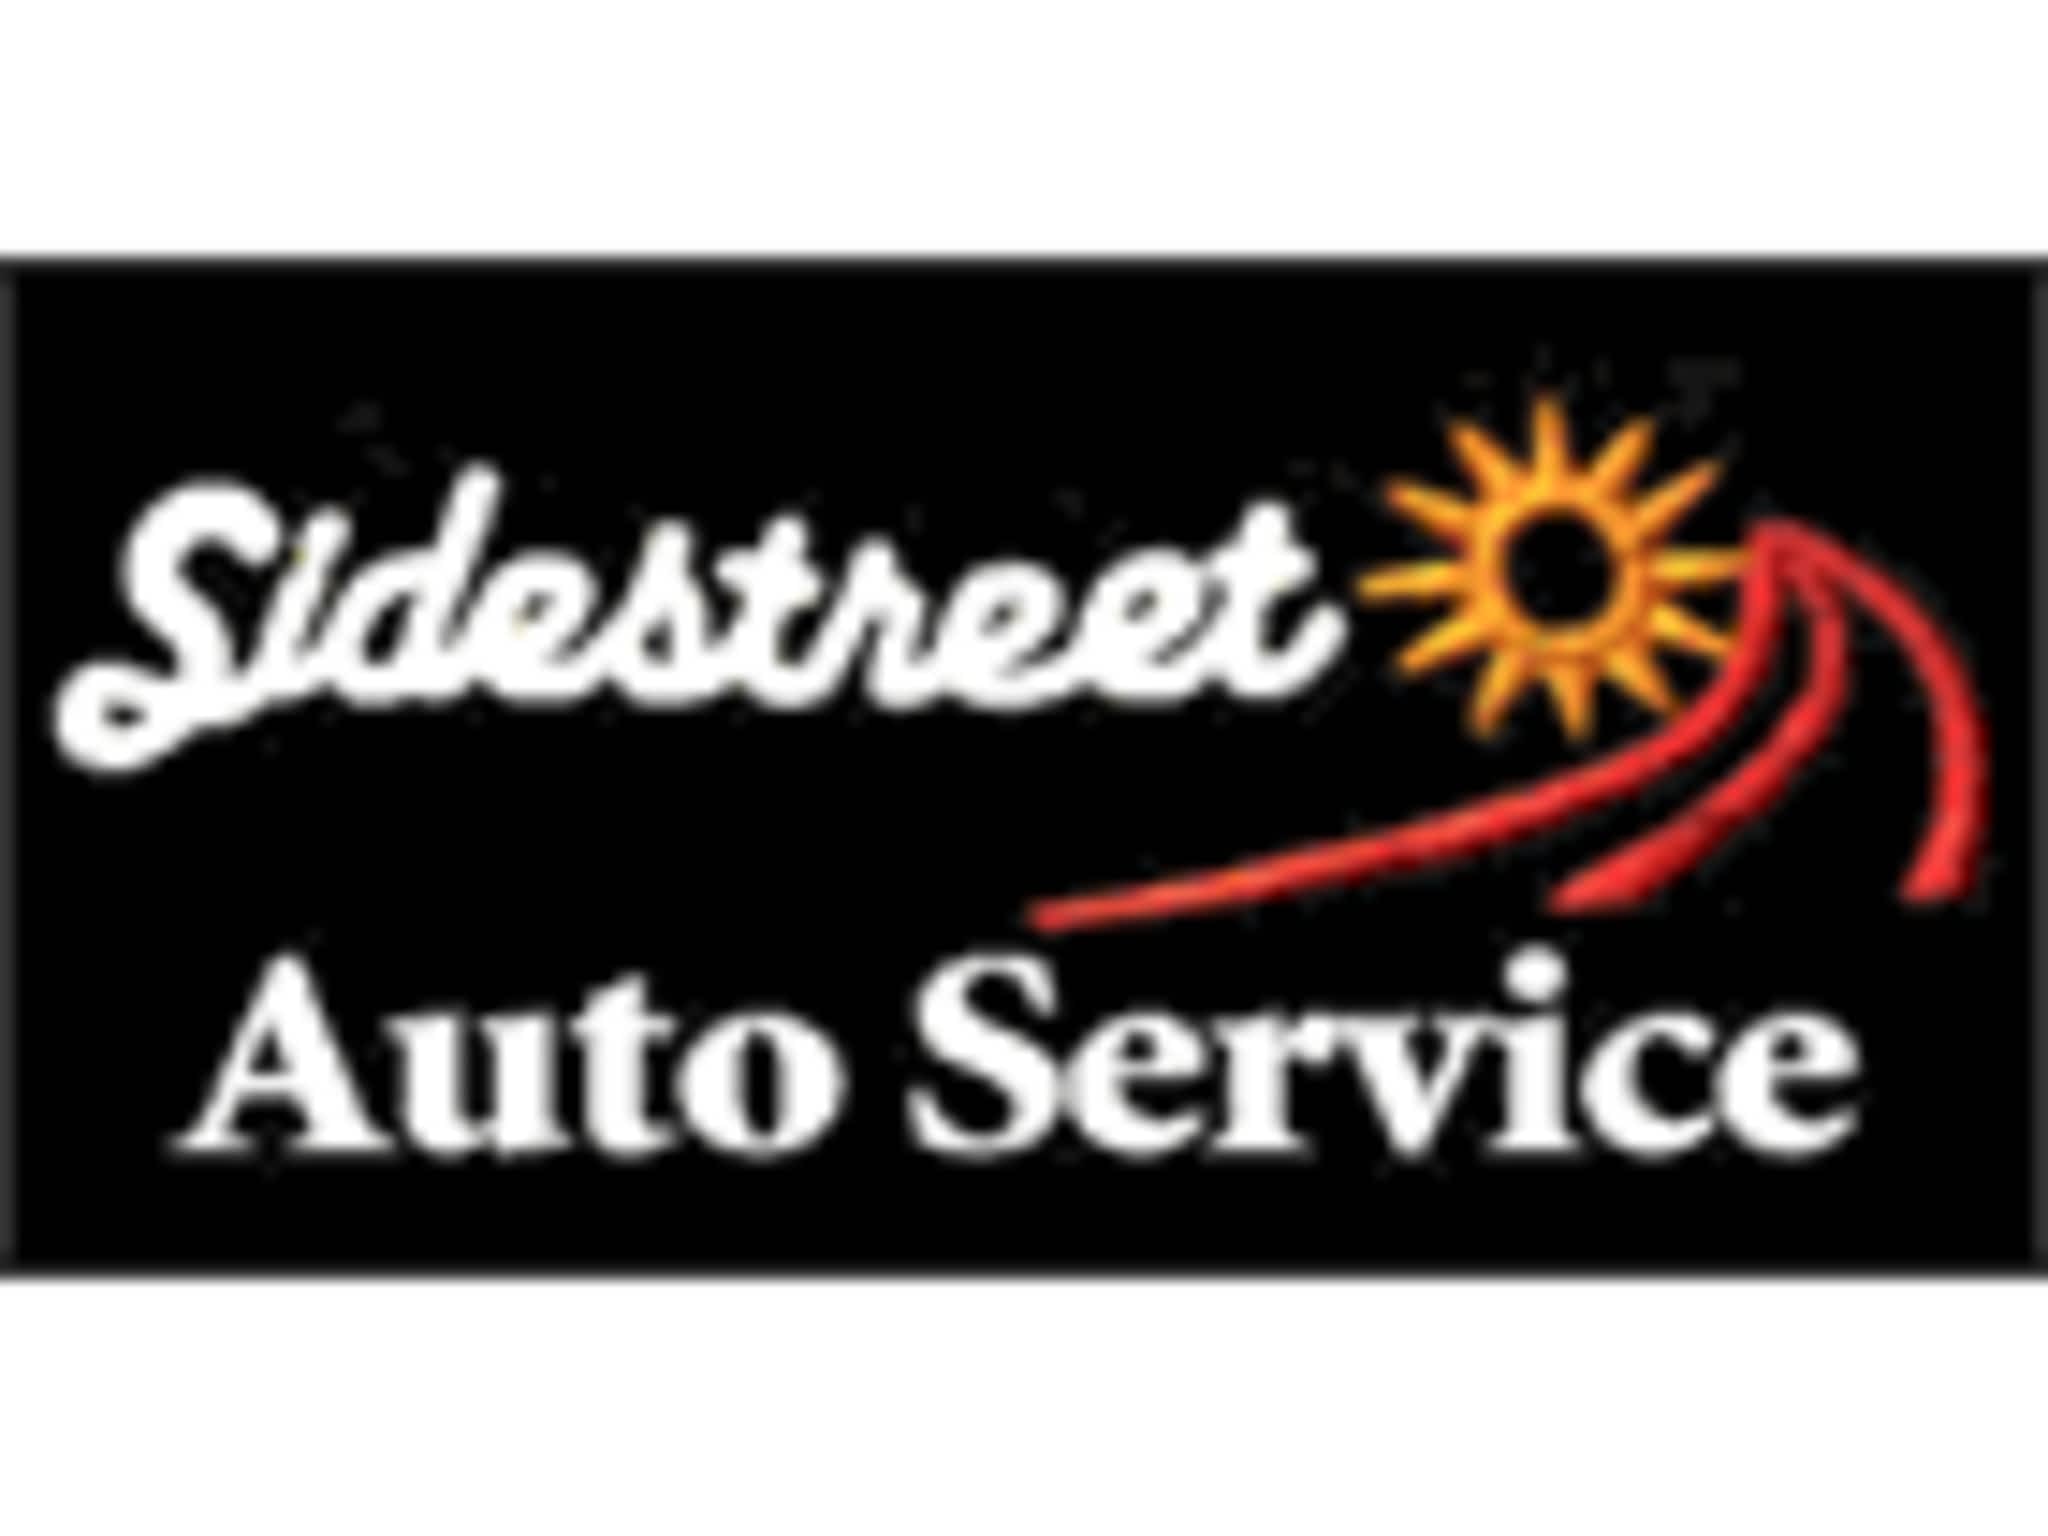 photo Sidestreet Auto Service